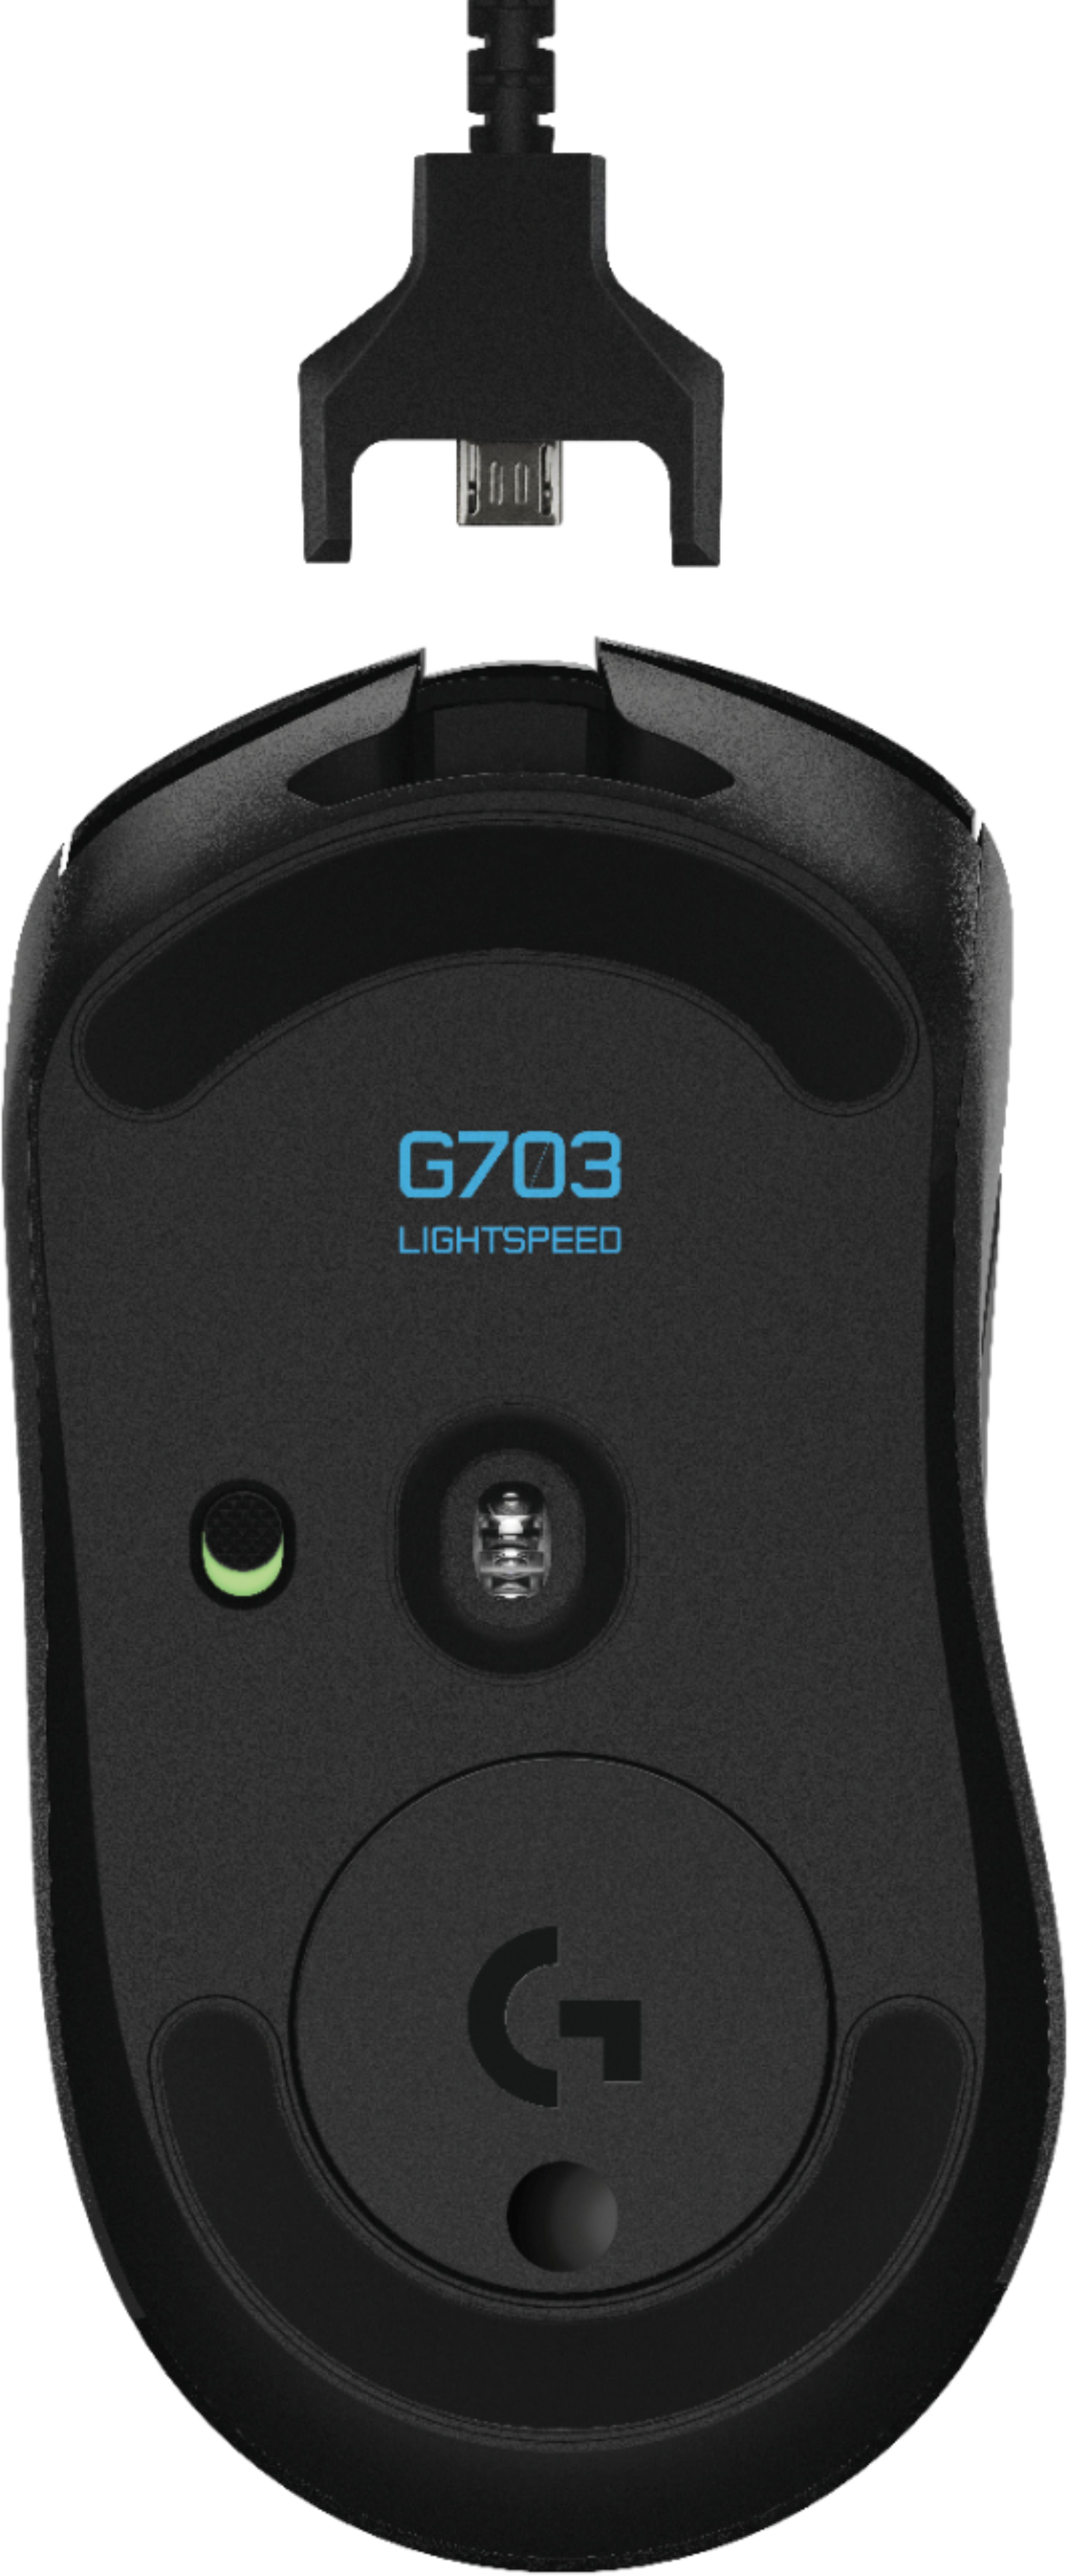 Logitech G703 LIGHTSPEED Wireless Optical Gaming Mouse Black 910